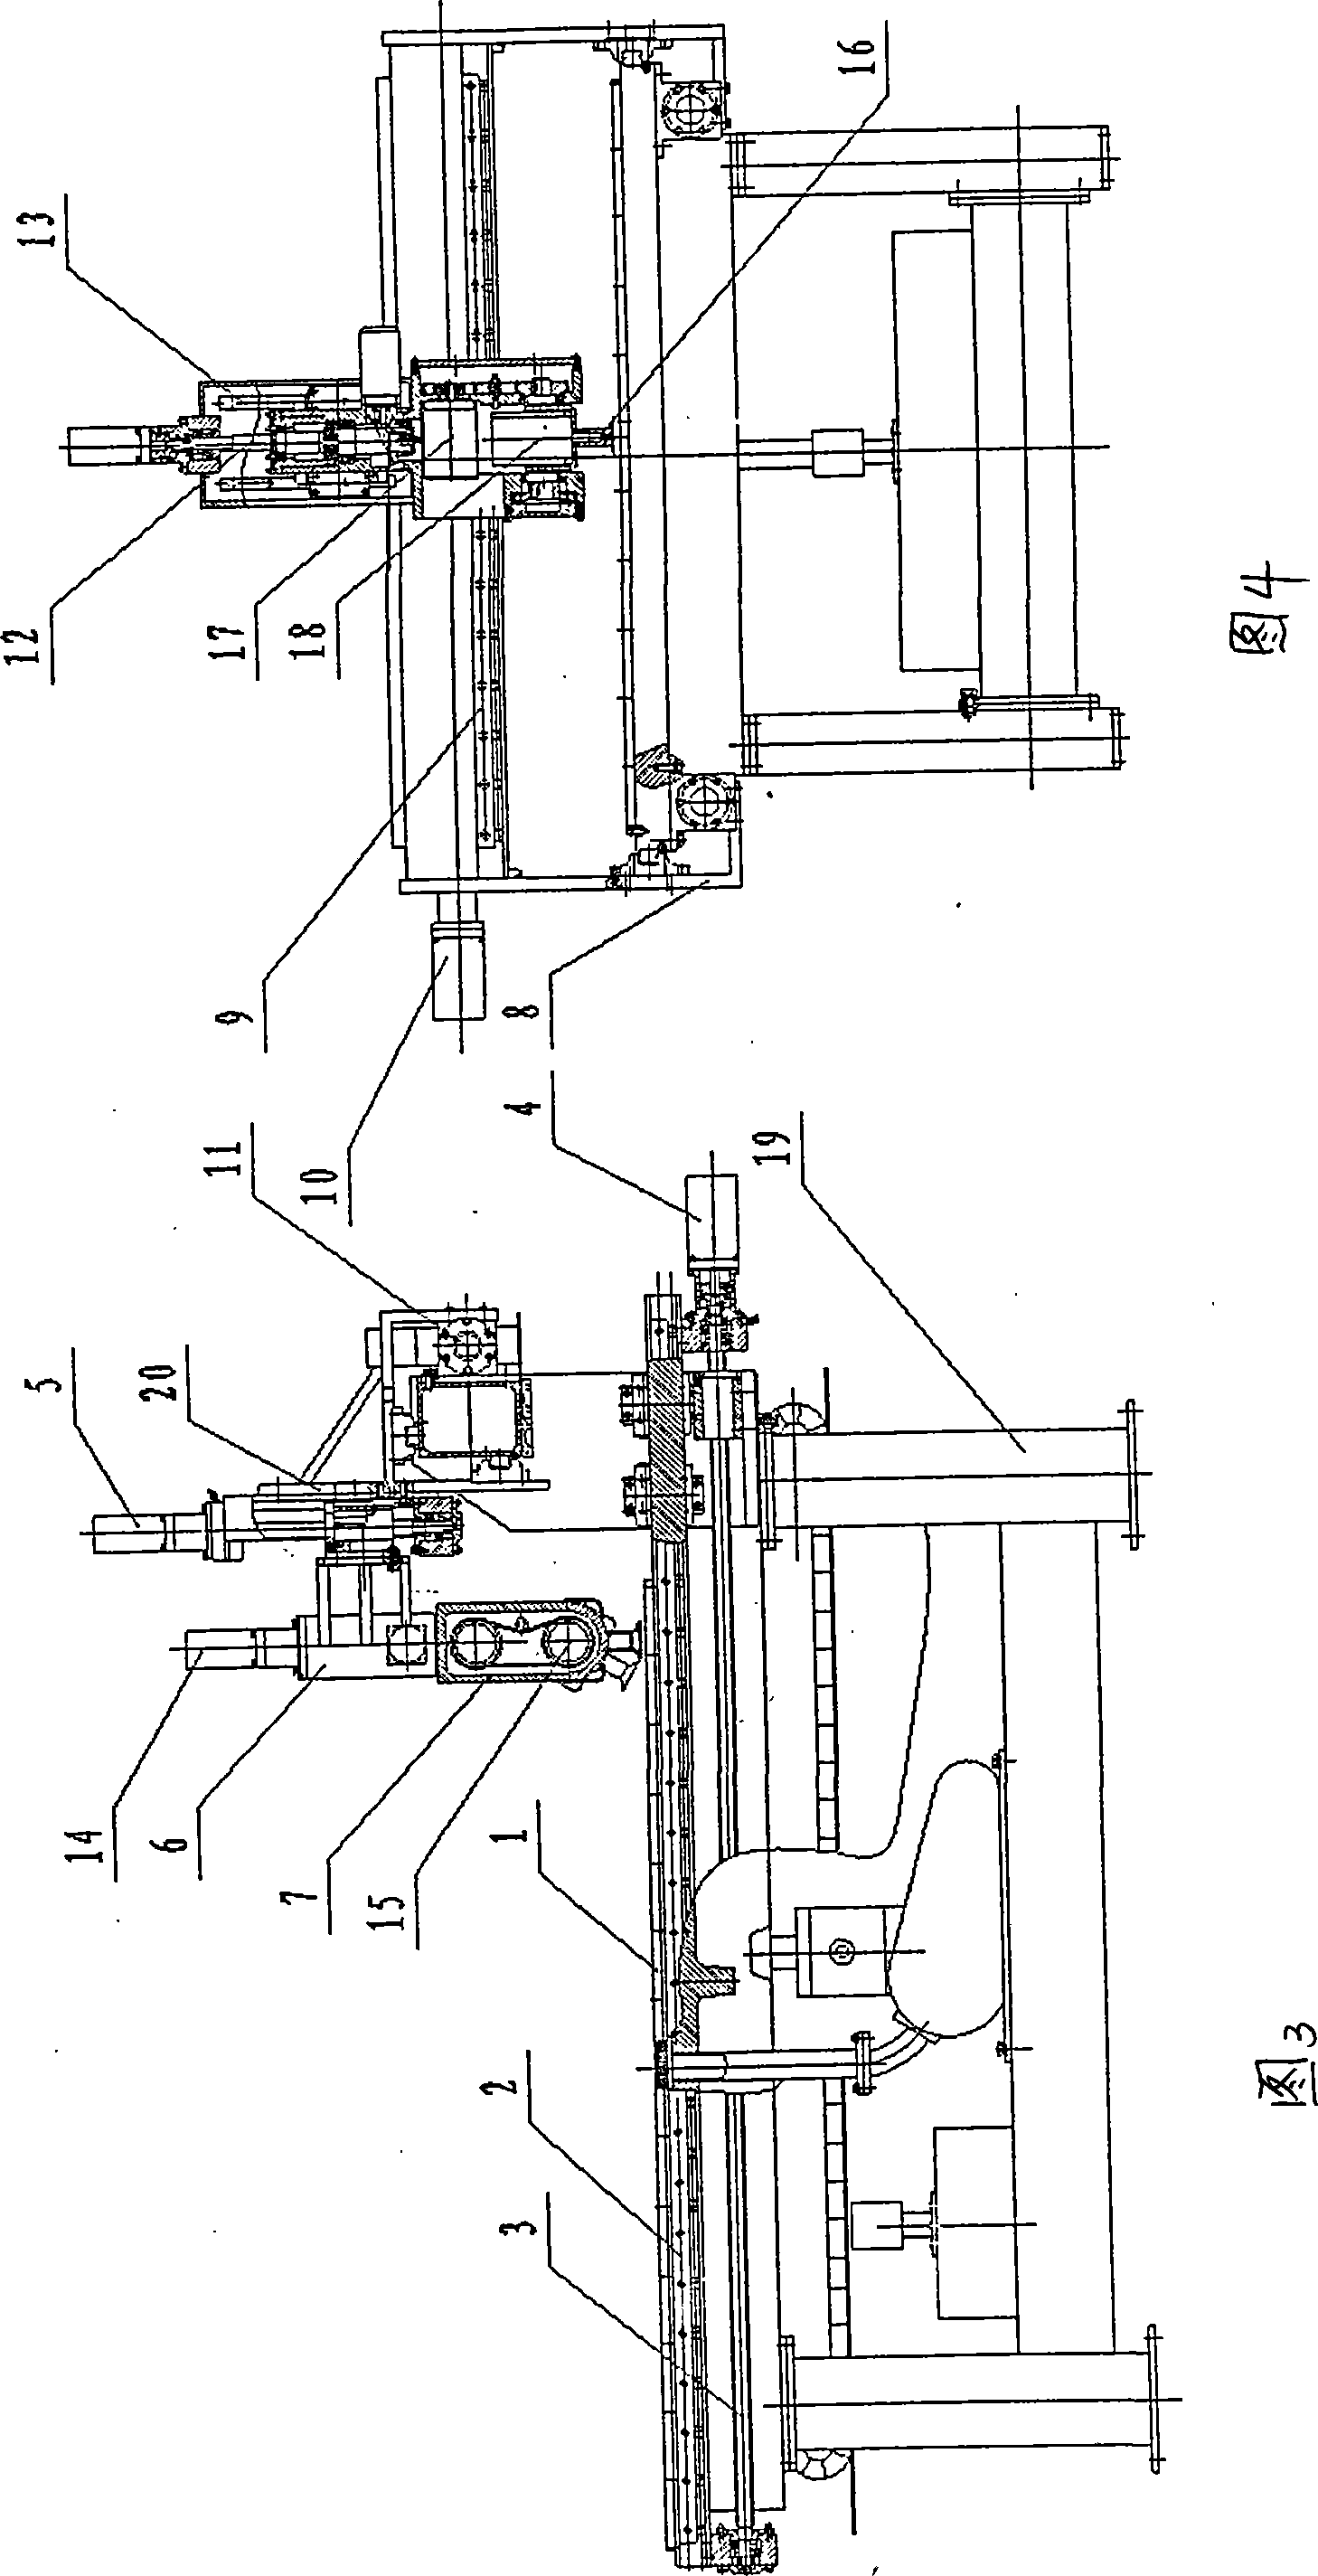 Equipment and method of envelope method processing film slitting chamfering